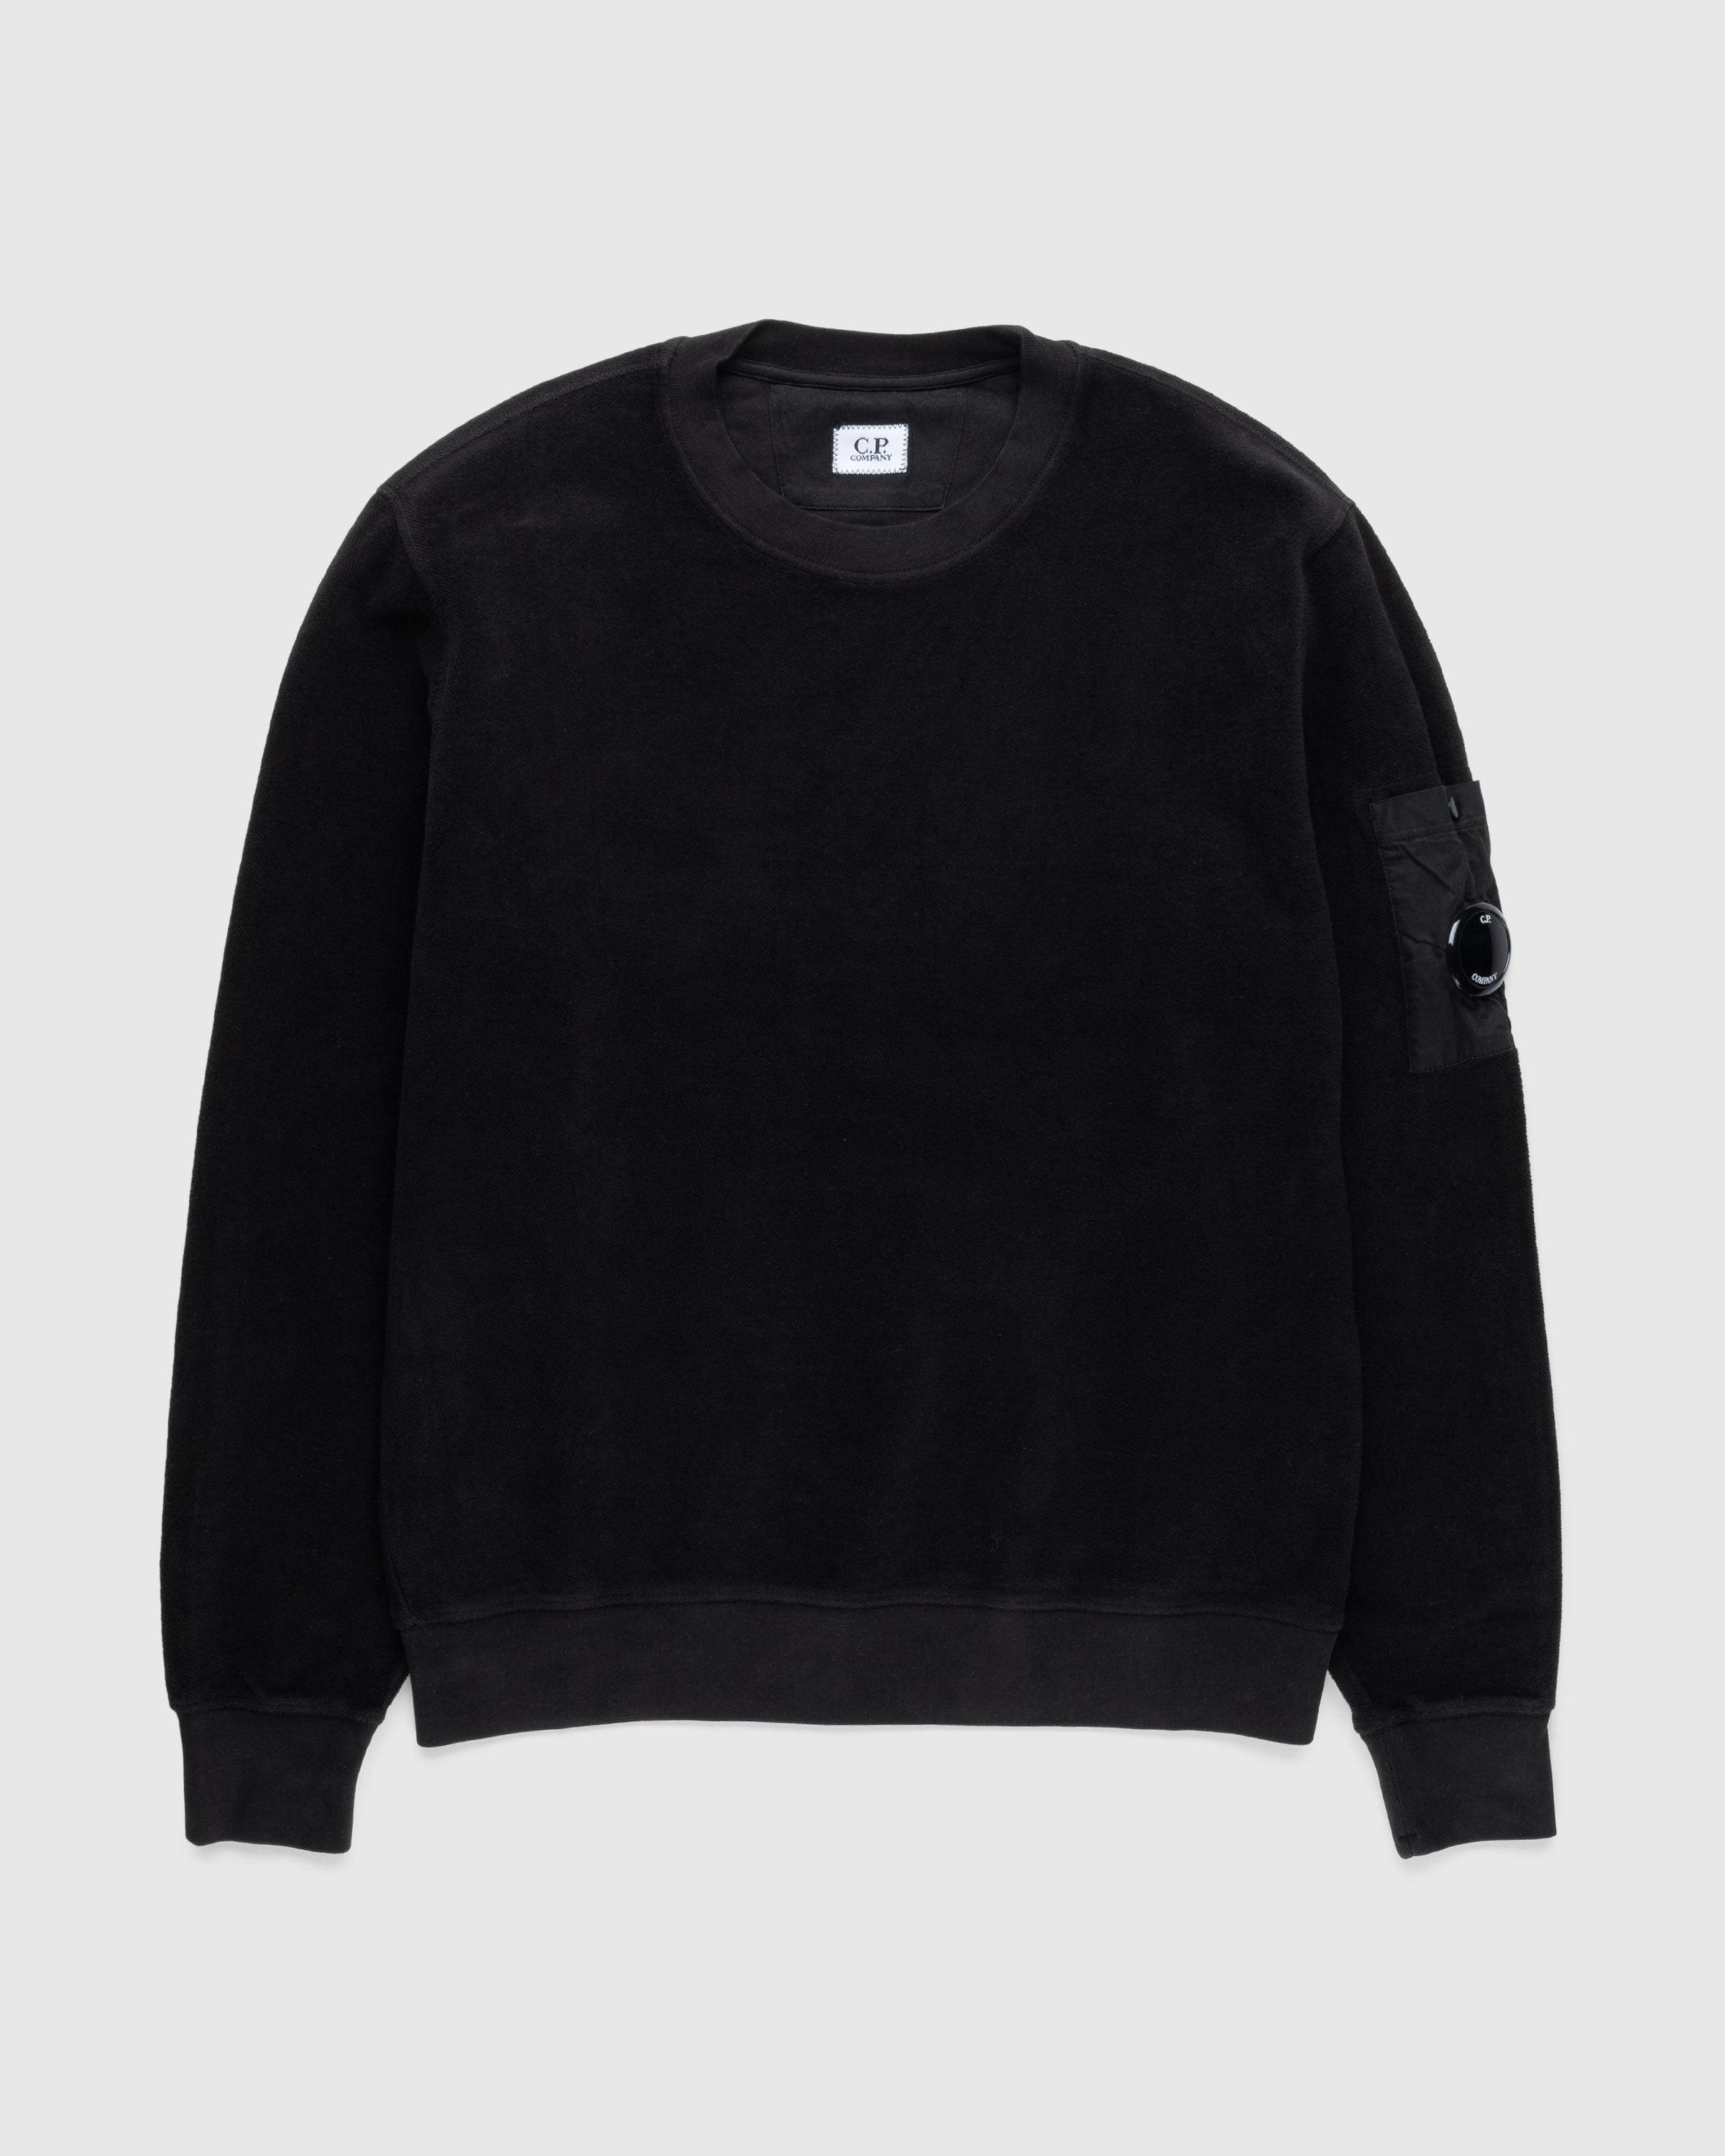 C.P. Company - Sweatshirts - Crew Neck - Clothing - Black - Image 1